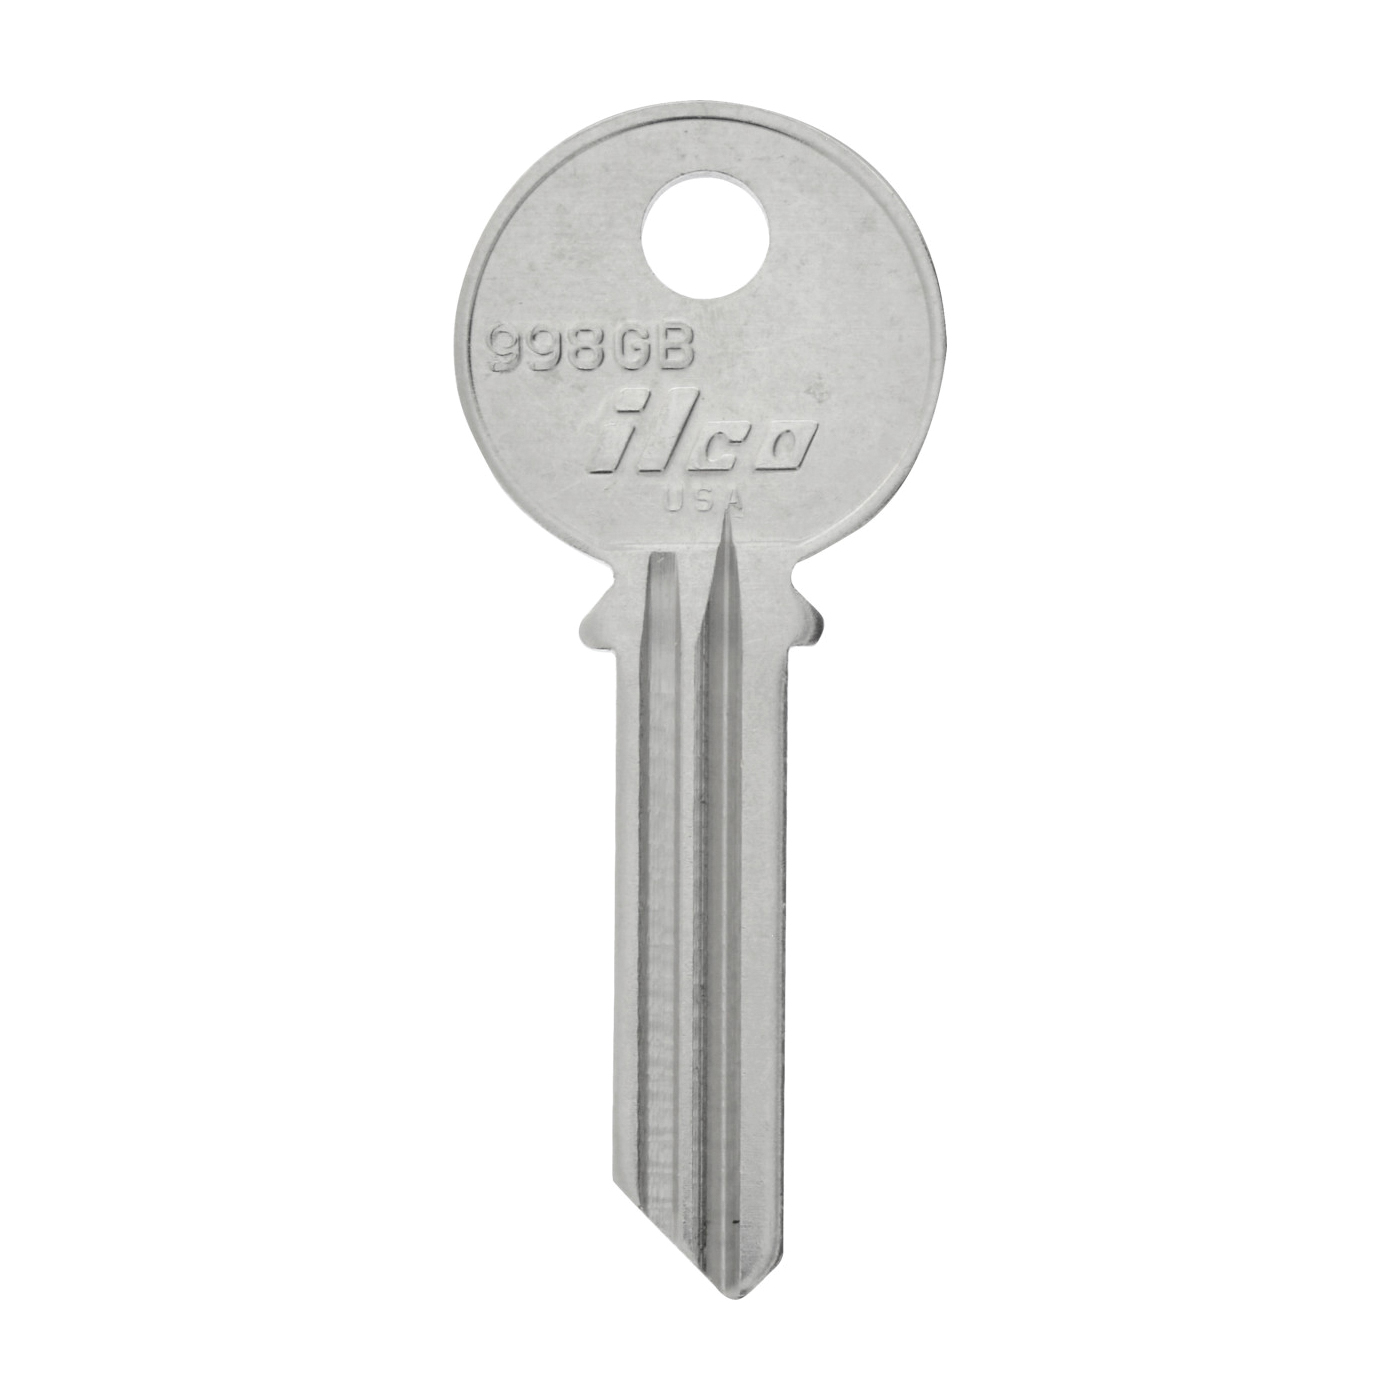 442330 Key Blank, Brass, Nickel-Plated, For: Yale Locks